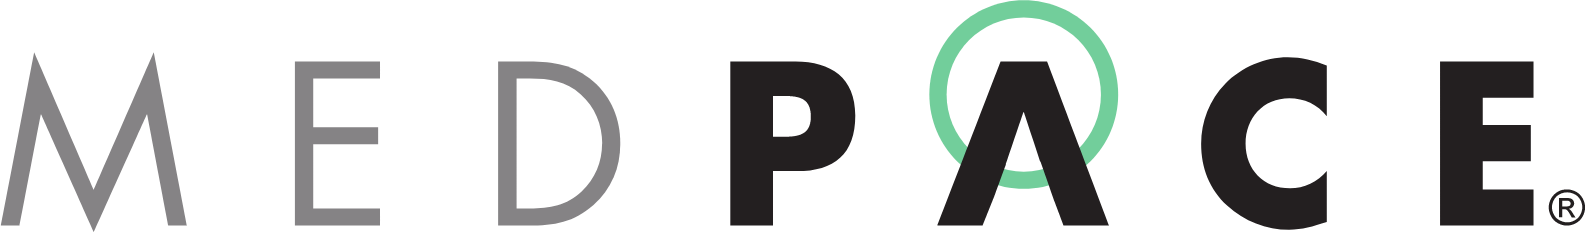 Medpace logo large (transparent PNG)